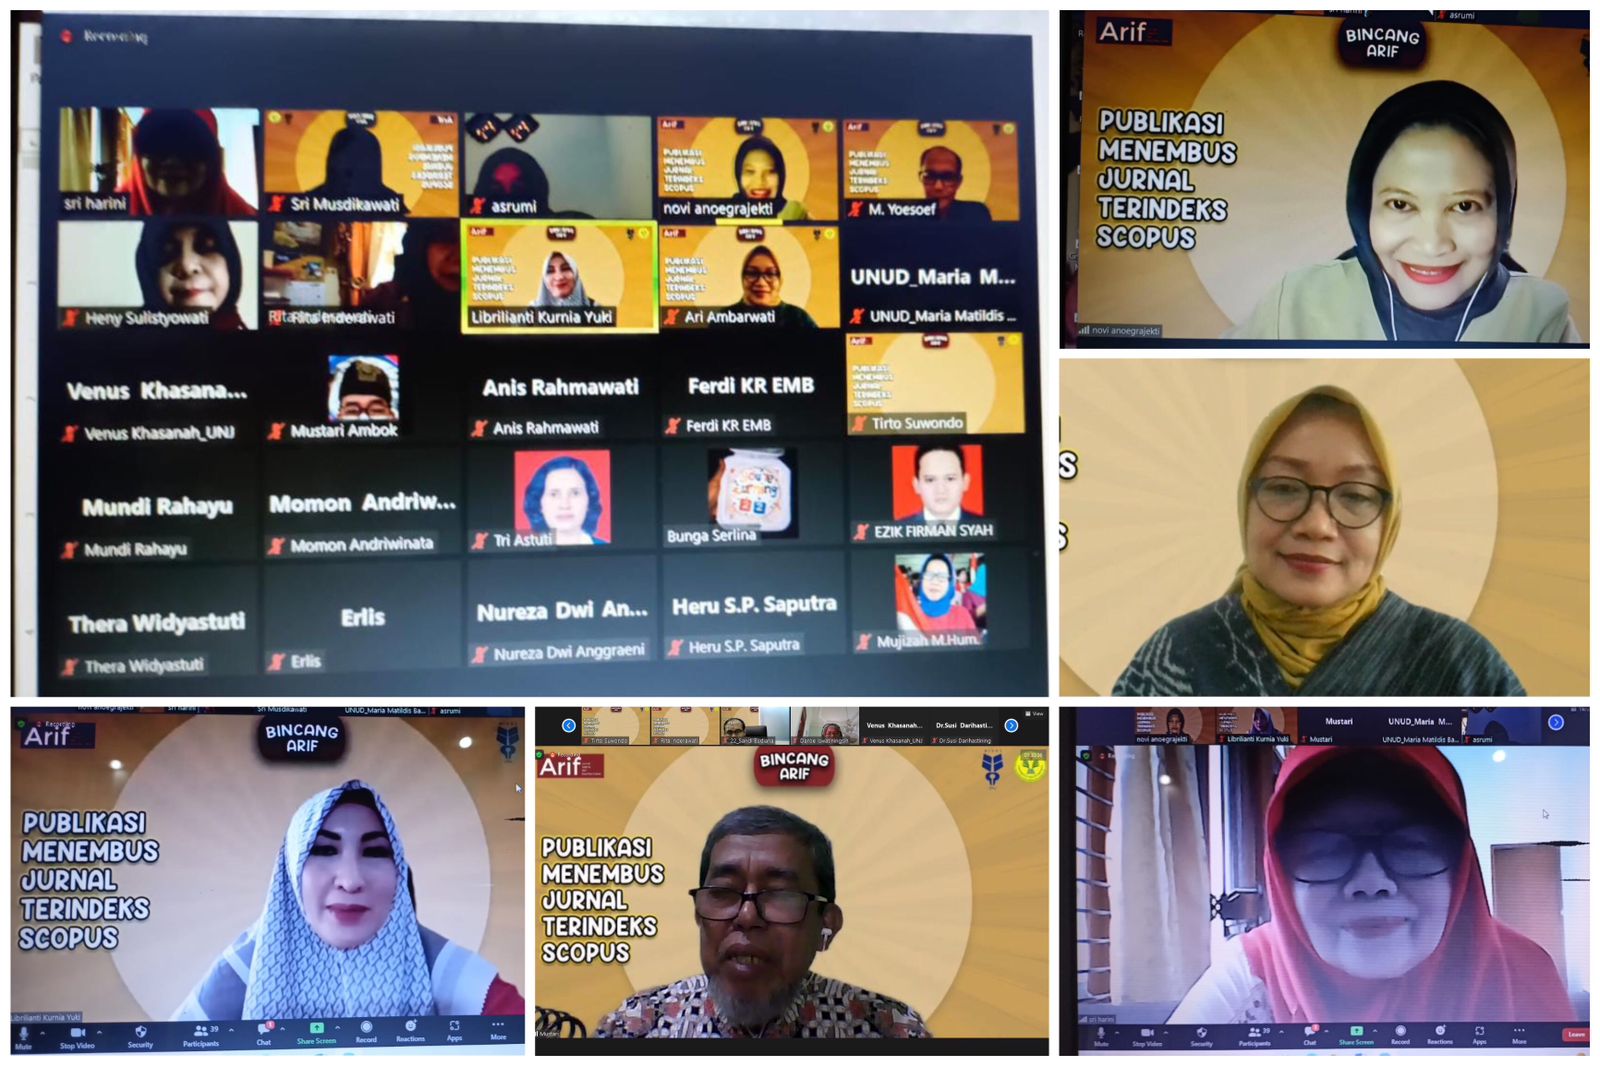 Jurnal Arif Kembali Gelar Workshop Bahas Publikasi Menembus Jurnal Terindeks Scopus